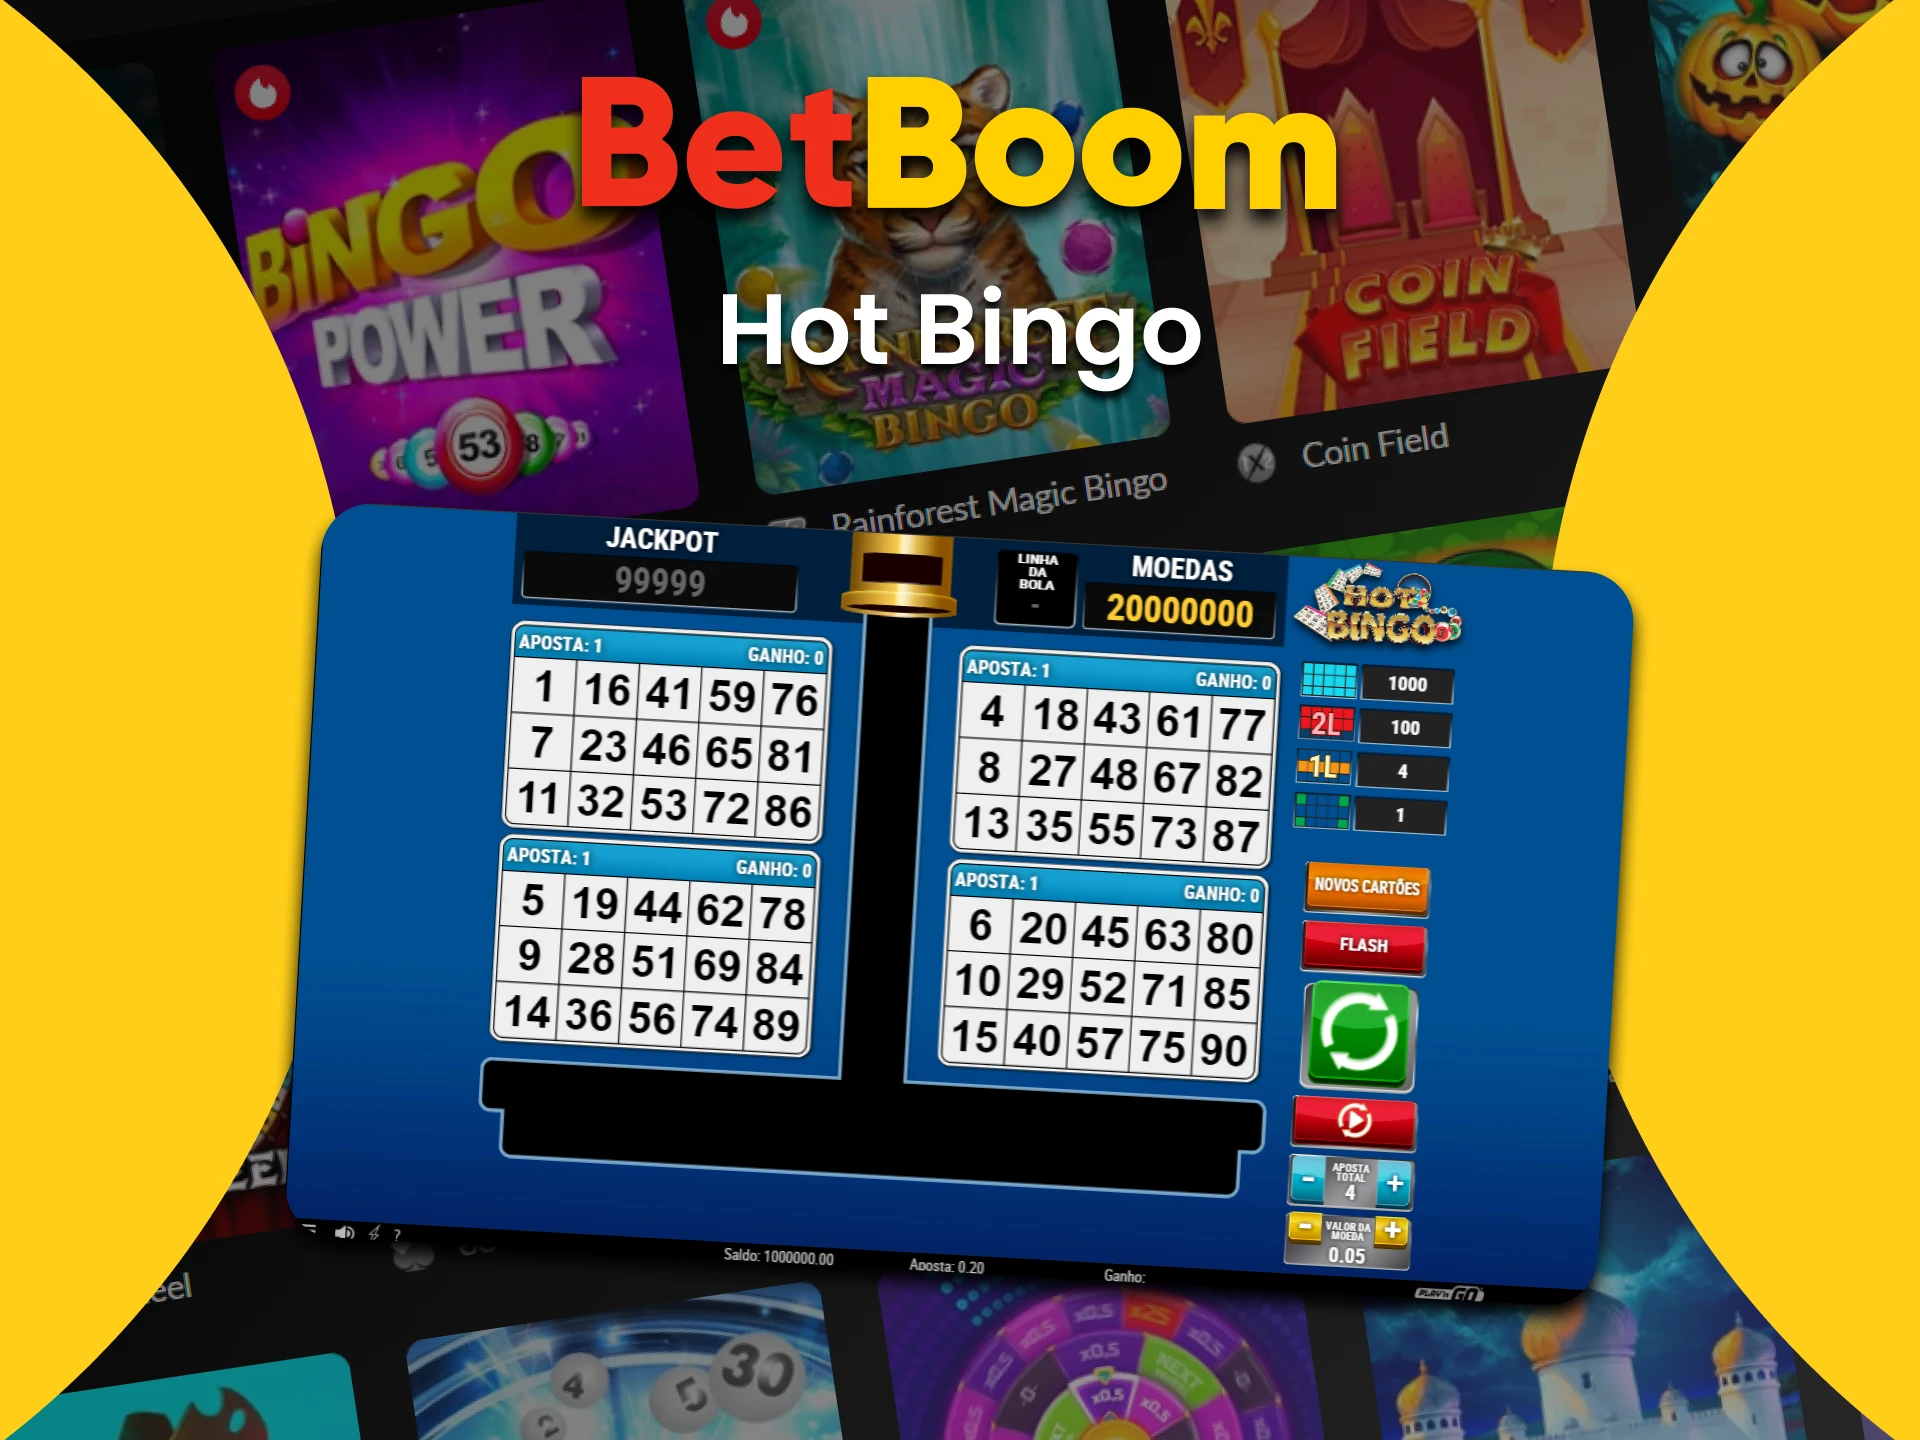 Para jogar Bingo, escolha Hot Bingo no BetBoom.